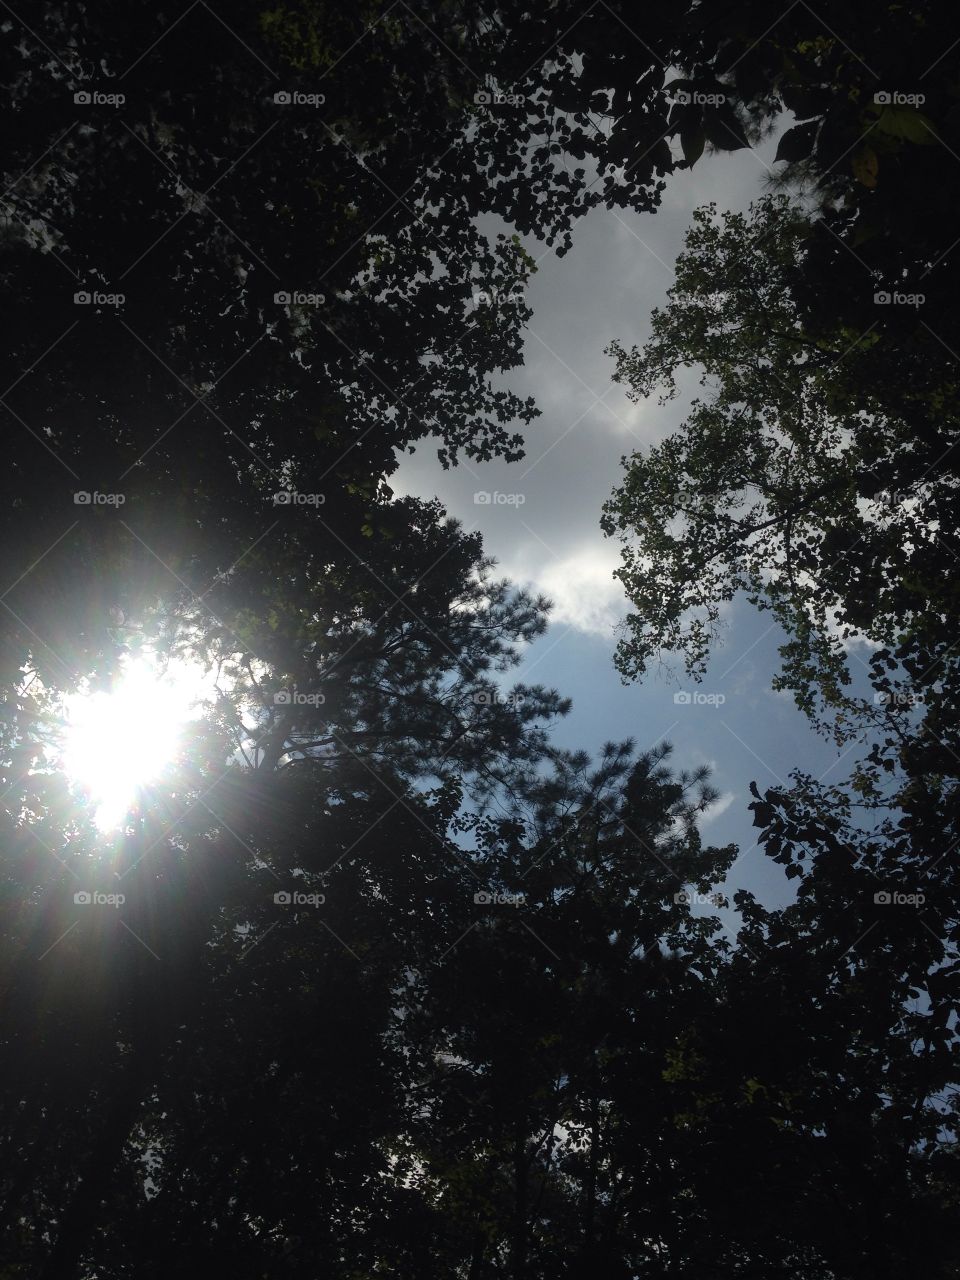 Alabama wilderness. Yes sun shining through the trees yes sunshine